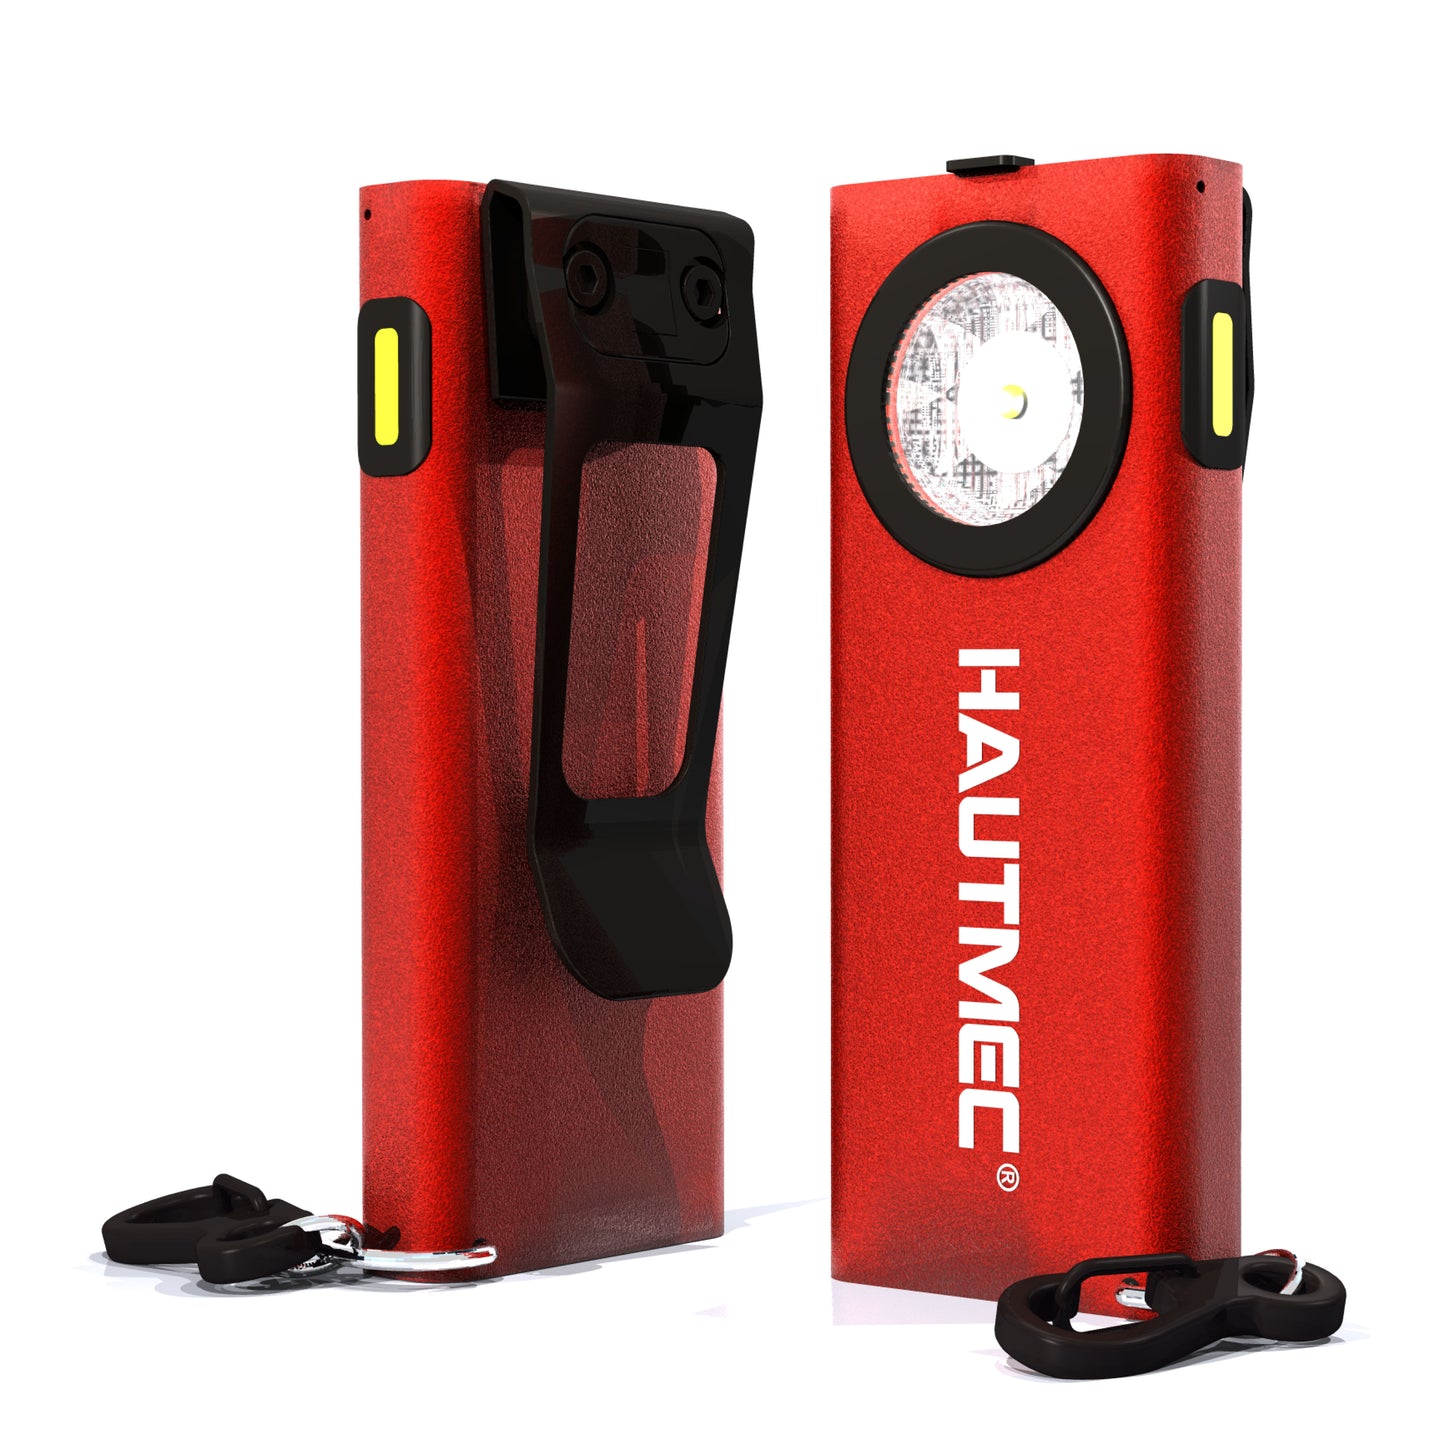 HAUTMEC Rechargeable 5 Modes Mini EDC Flashlight, Magnetic Base & Clip,Type-C Charging, Portable Flat Pocket Keychain Flashlight for Outdoor, Car Repairing, Garage,Camping HT0332